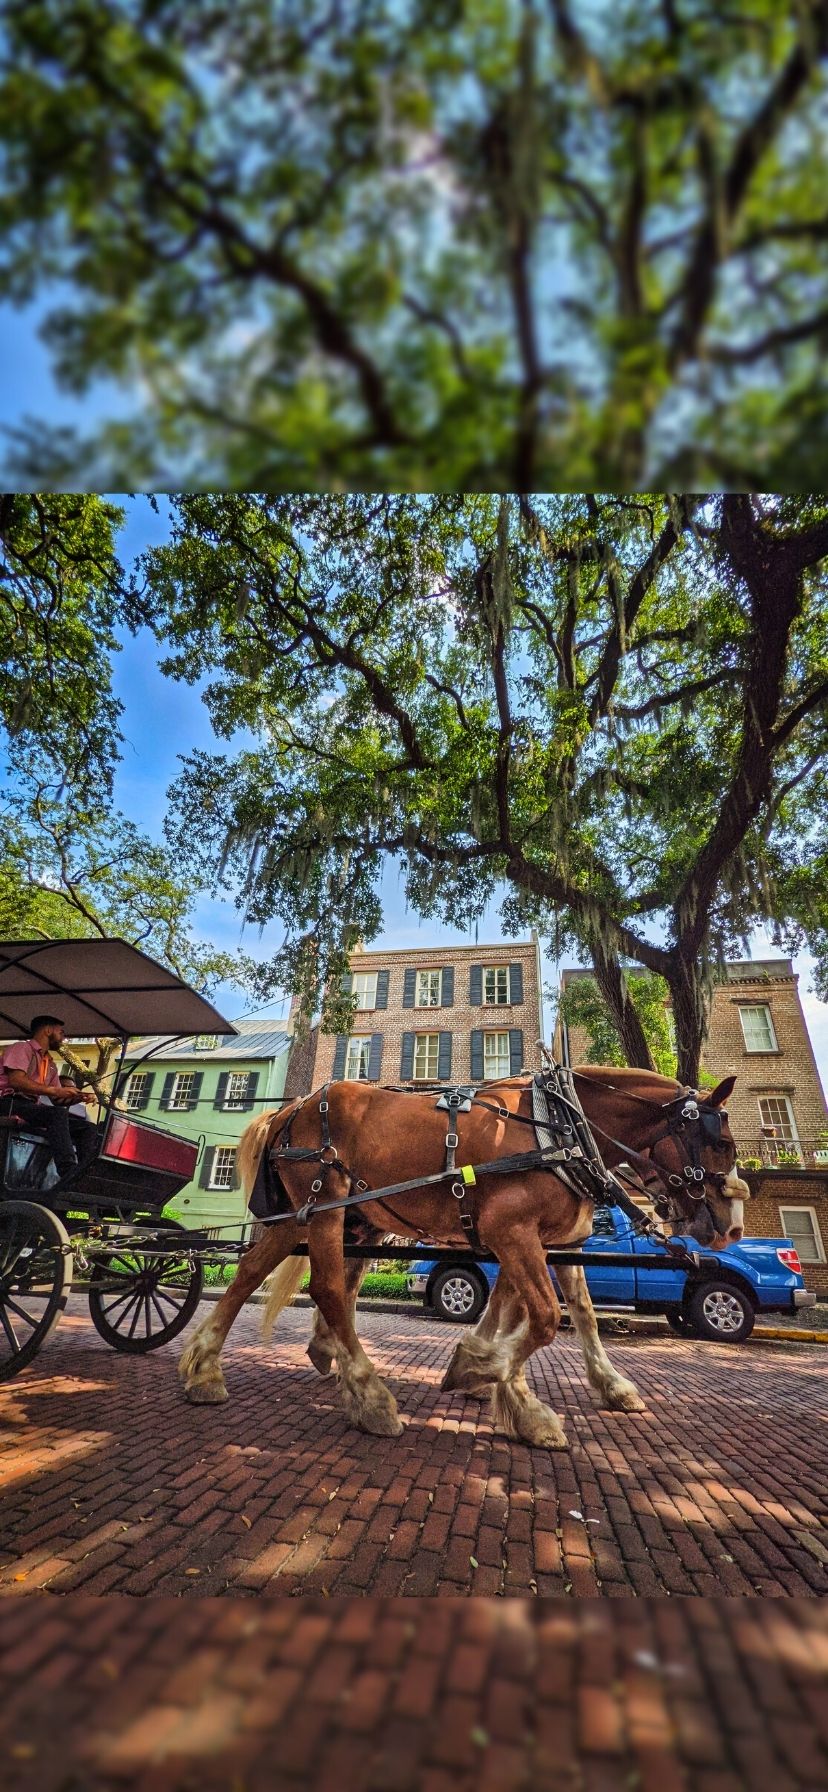 Horse drawn carriage in historic district of Savannah, Georgia